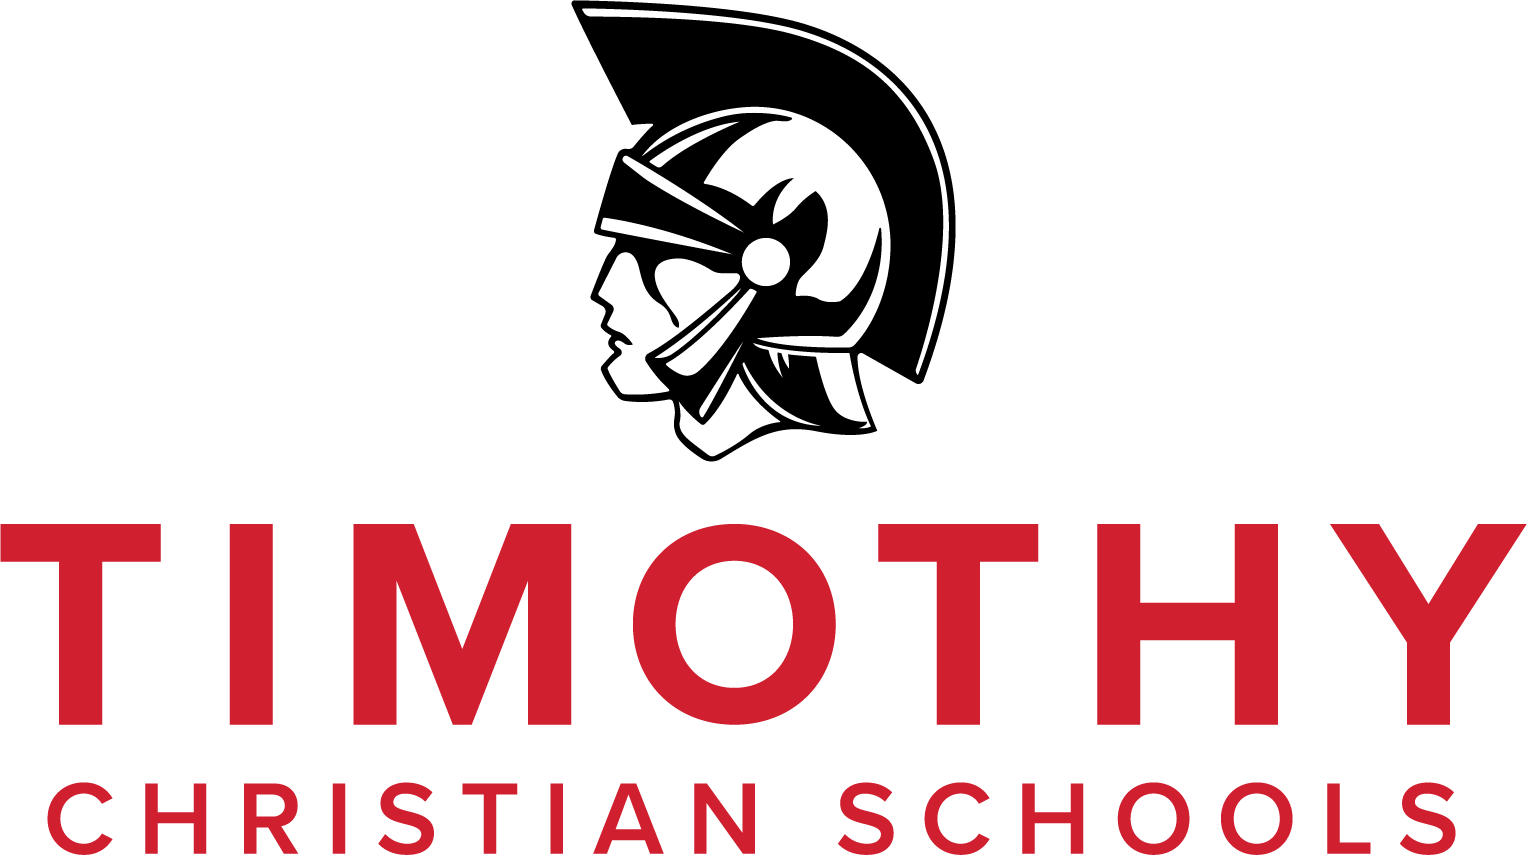 Timothy Christian Schools logo.